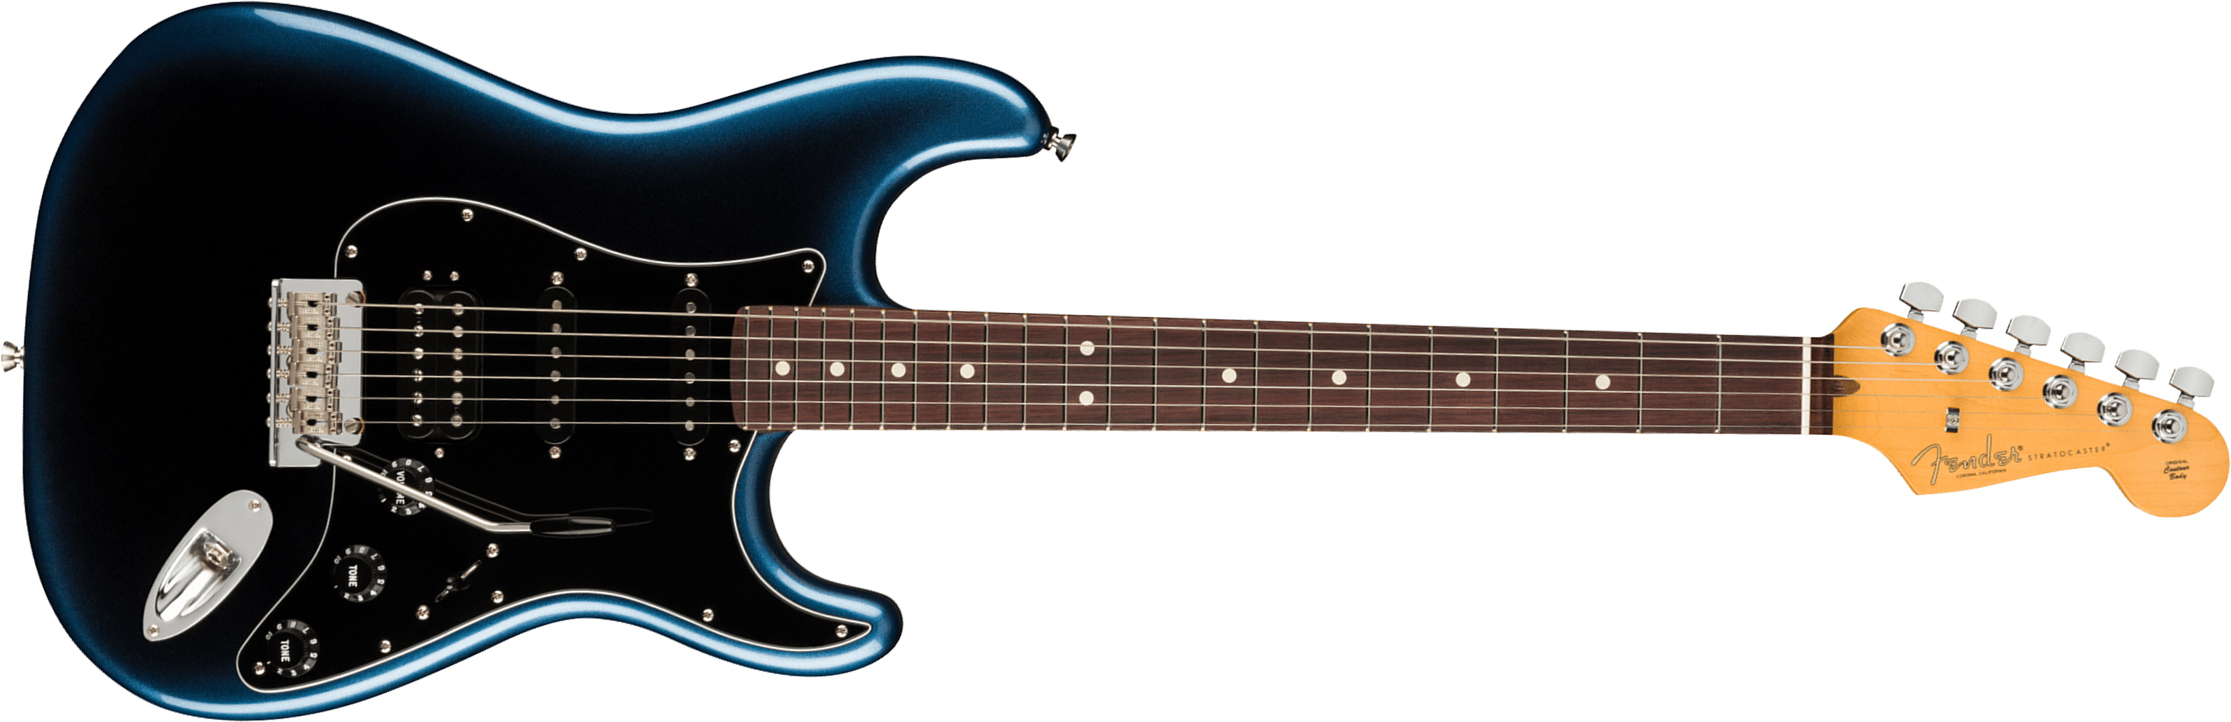 Fender Strat American Professional Ii Hss Usa Rw - Dark Night - Str shape electric guitar - Main picture